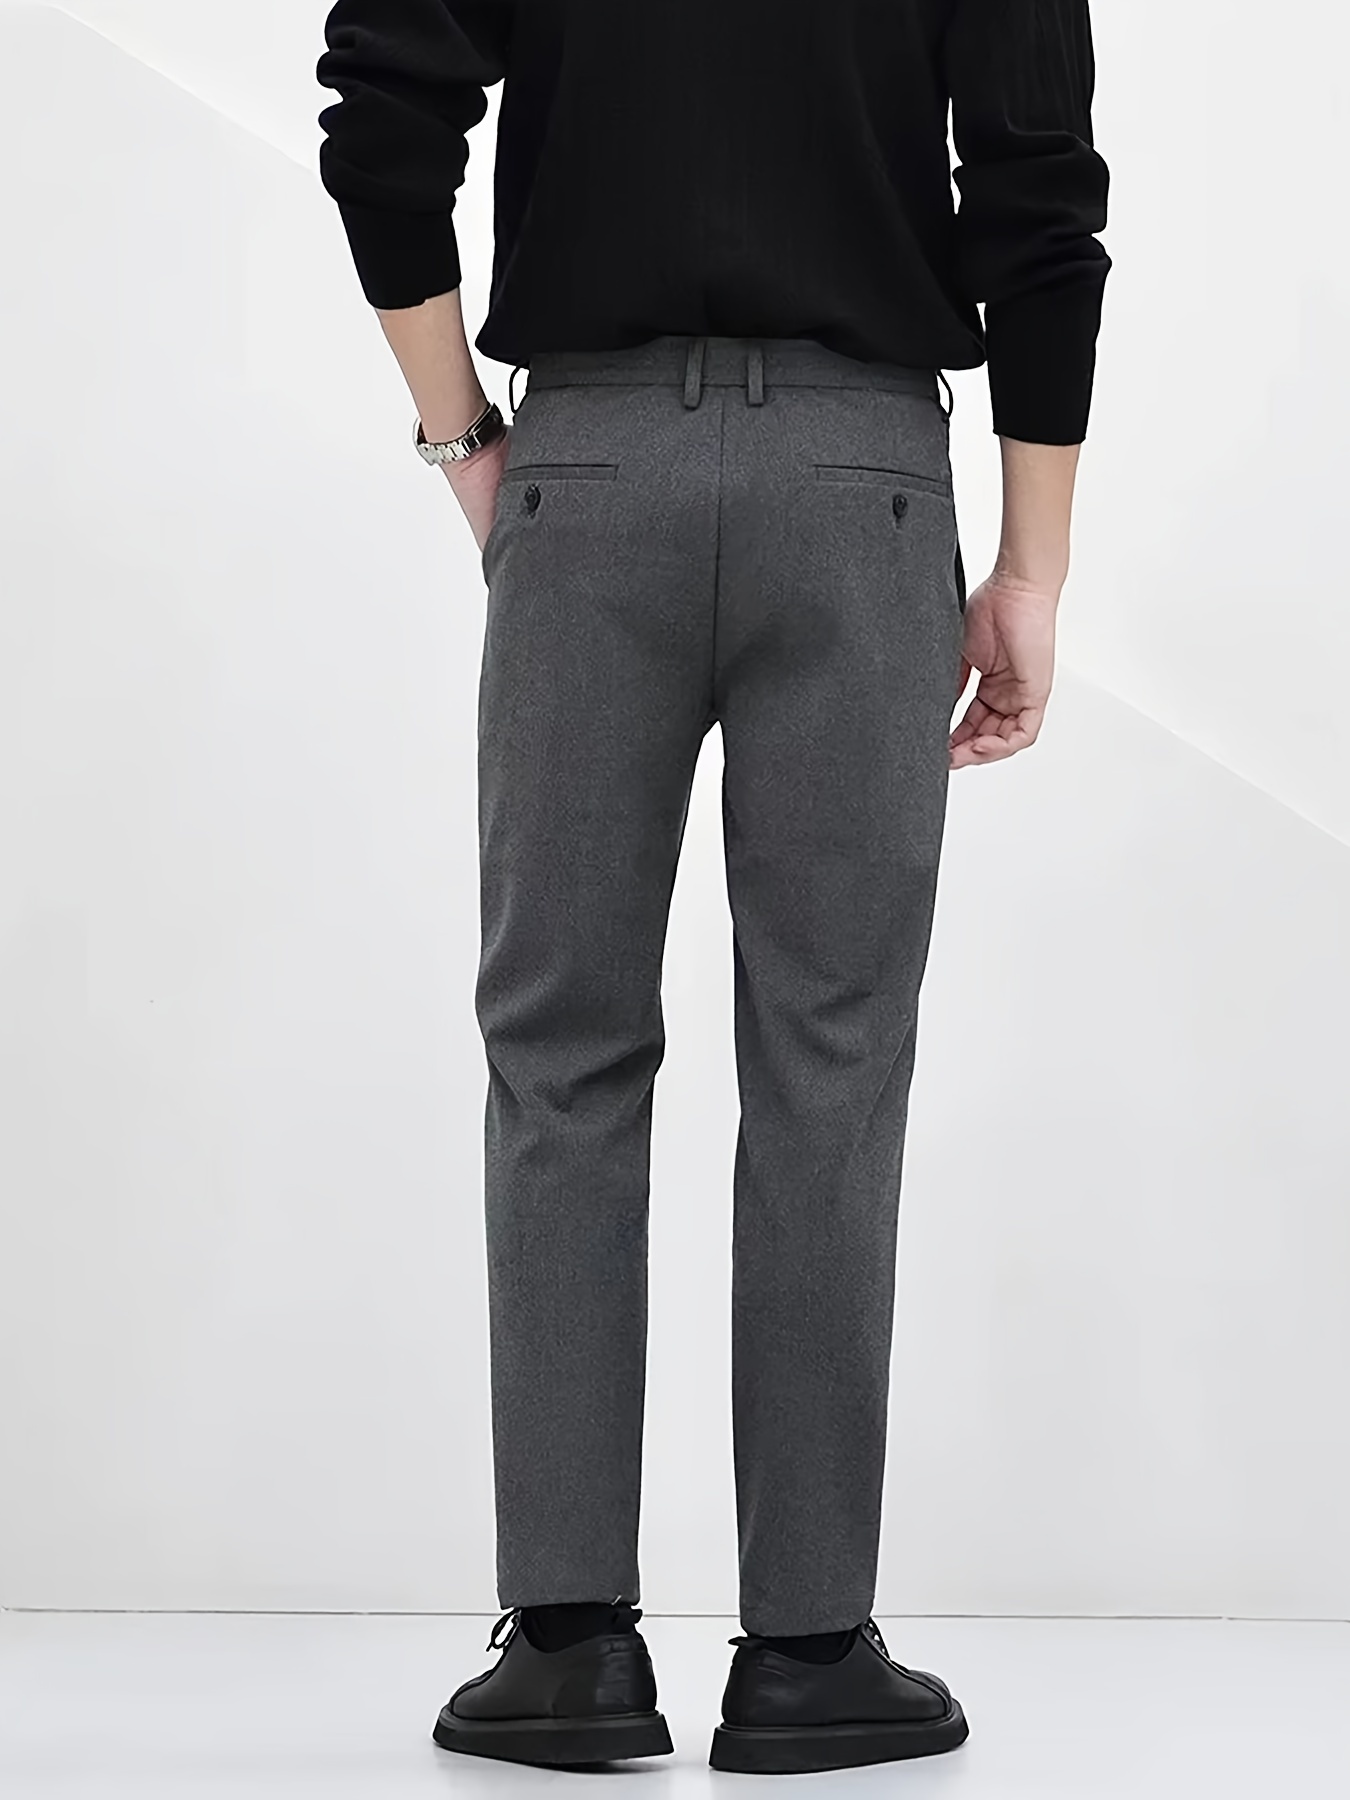 NEW!! Banana Republic Men's Stretch Fabric Slim Fit 5-Pocket Pants